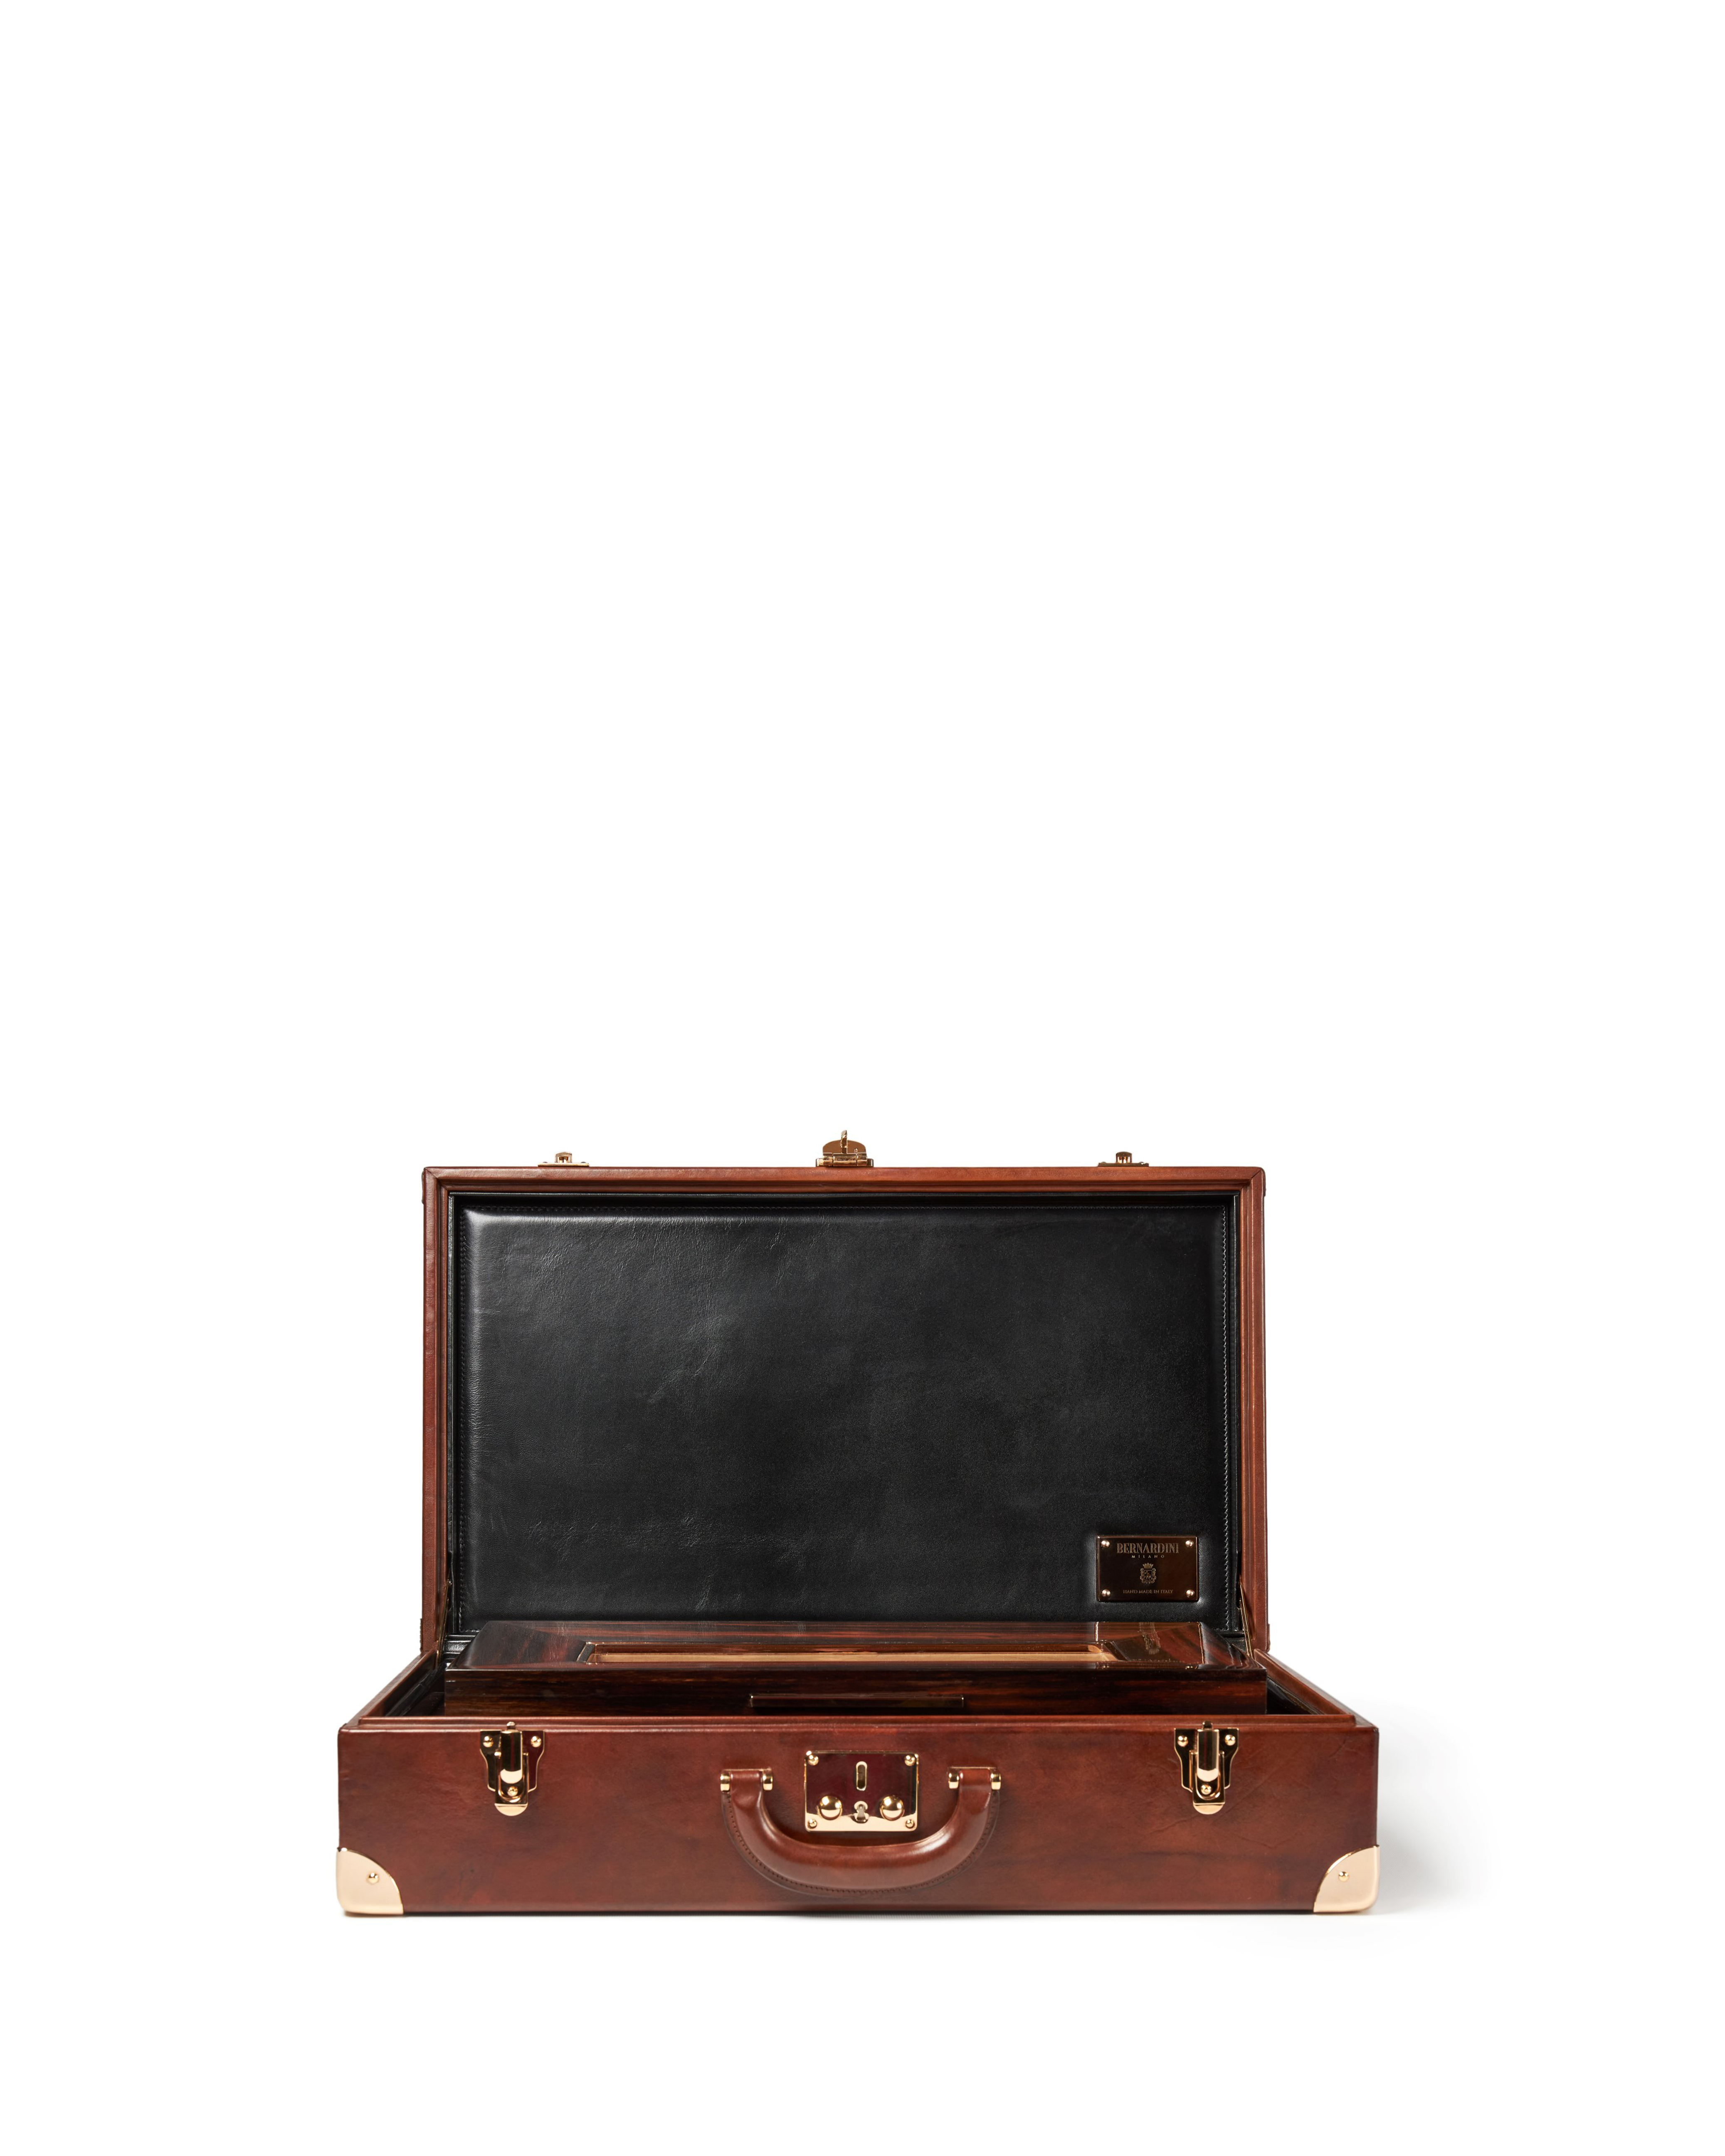 Bernardini Humidor Briefcase - Black leather and Ebony